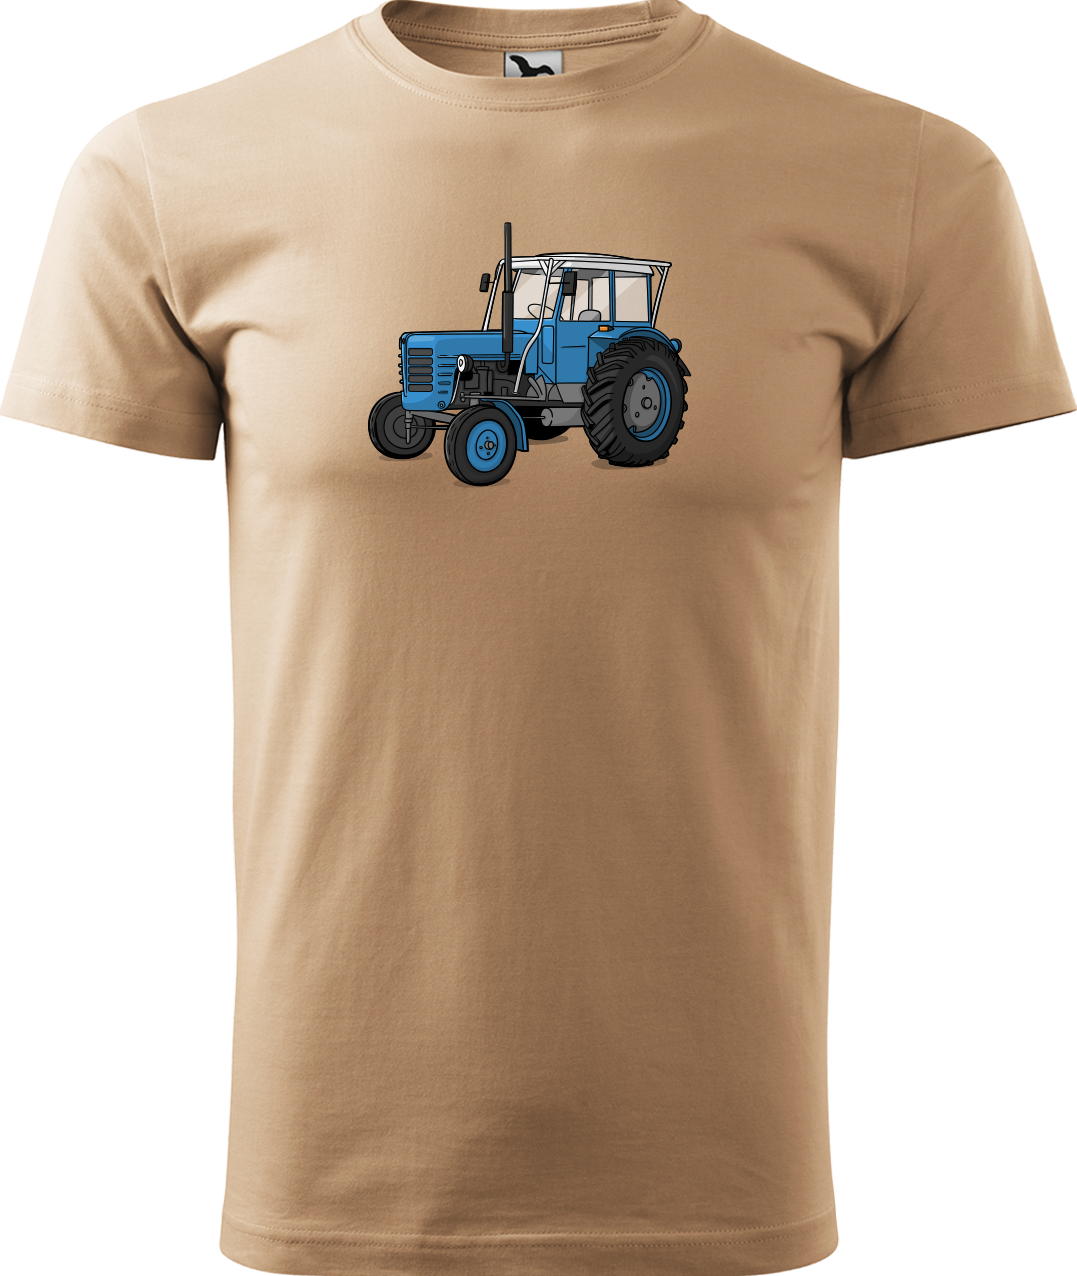 Tričko s traktorem - Starý traktor Velikost: L, Barva: Písková (08)